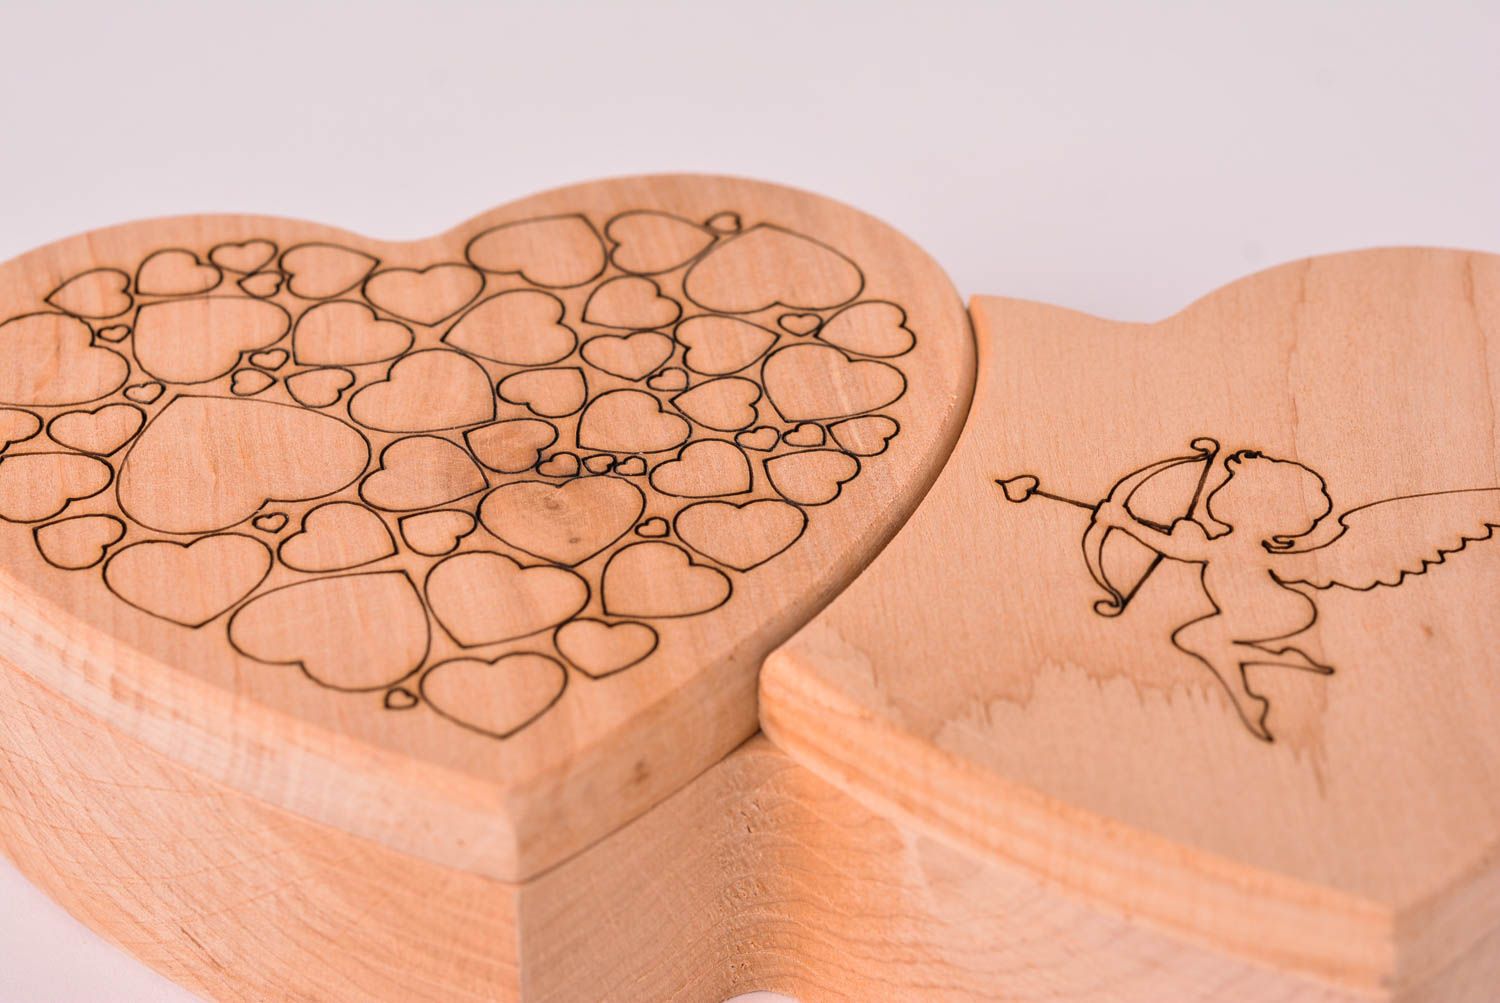 BUY Stylish handmade wooden box wood craft ideas jewelry box design